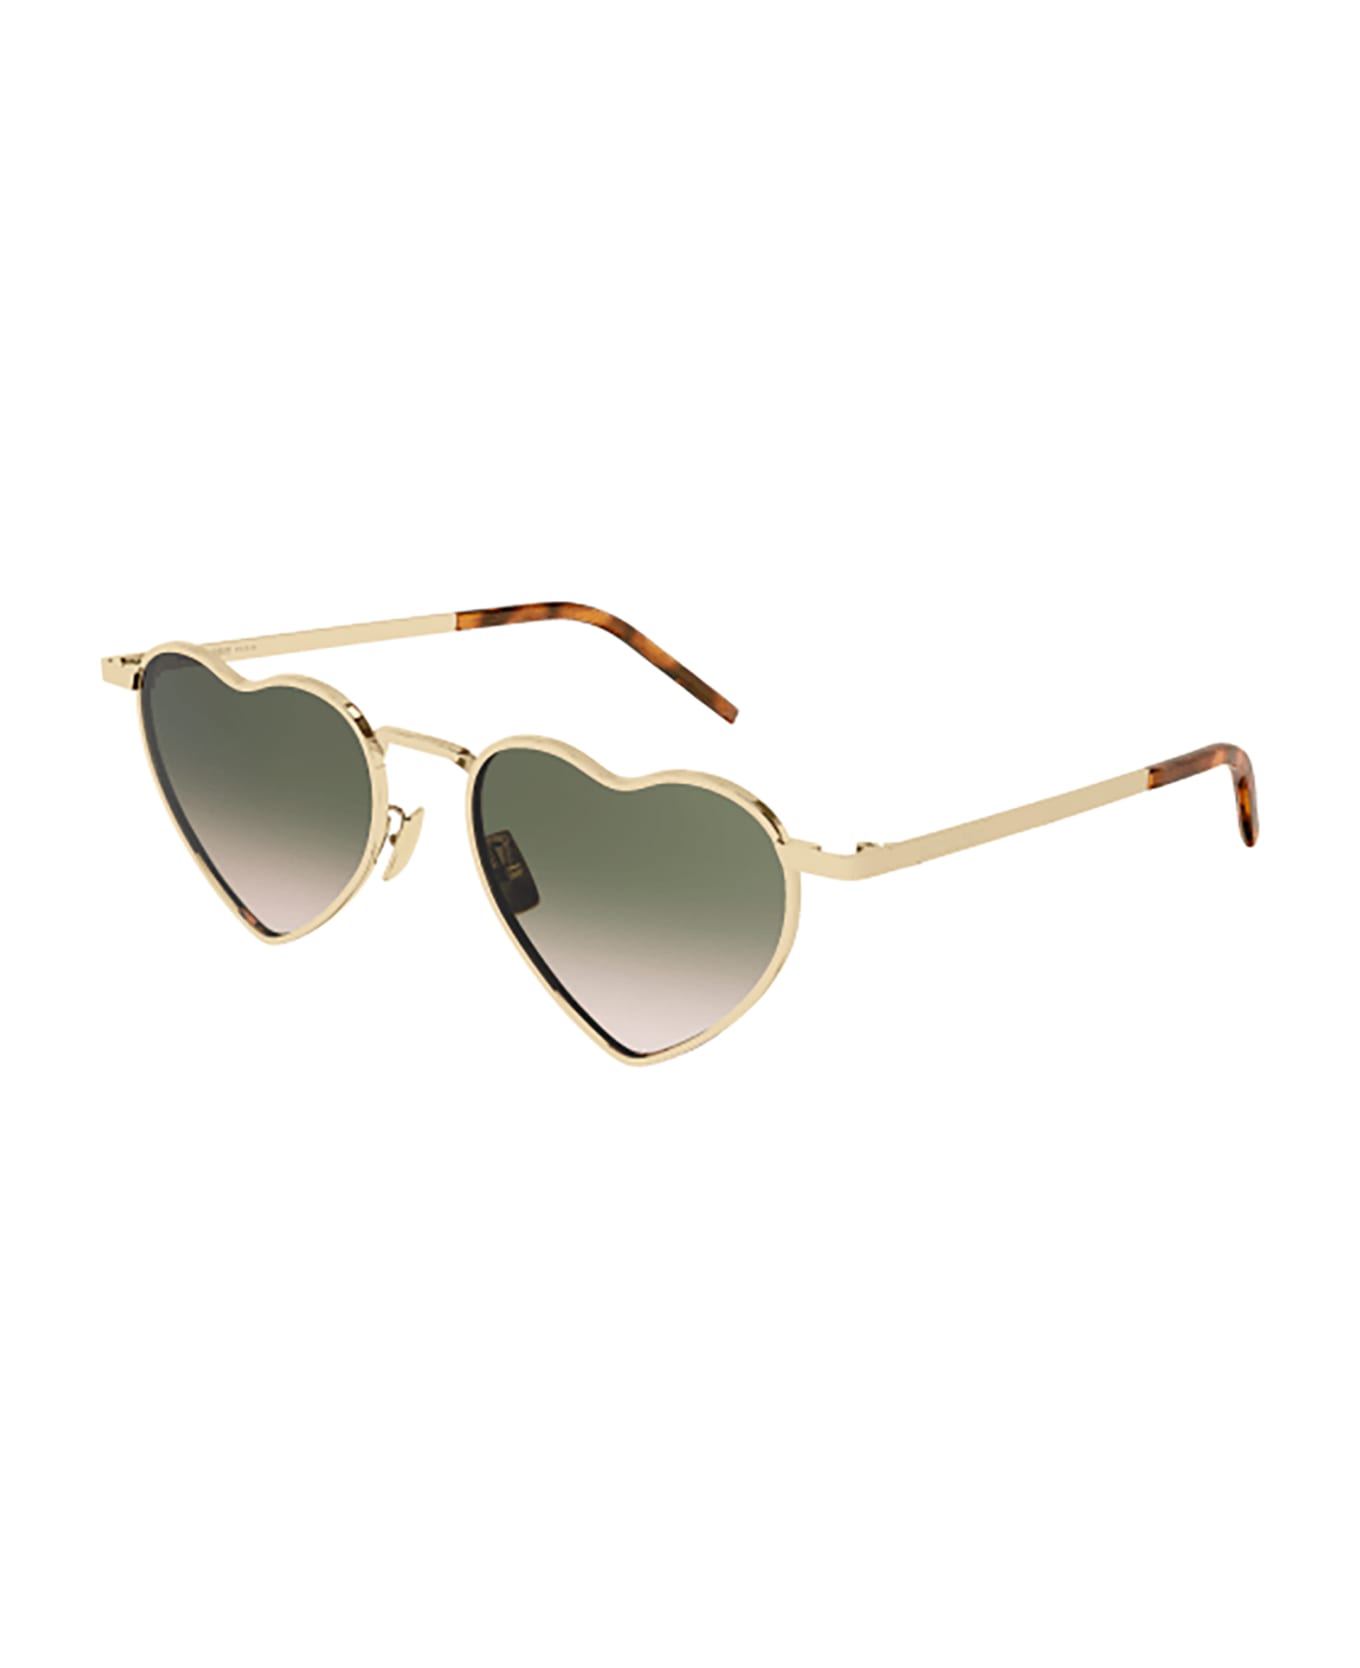 Saint Laurent Eyewear SL 301 LOULOU Sunglasses - Gold Gold Green